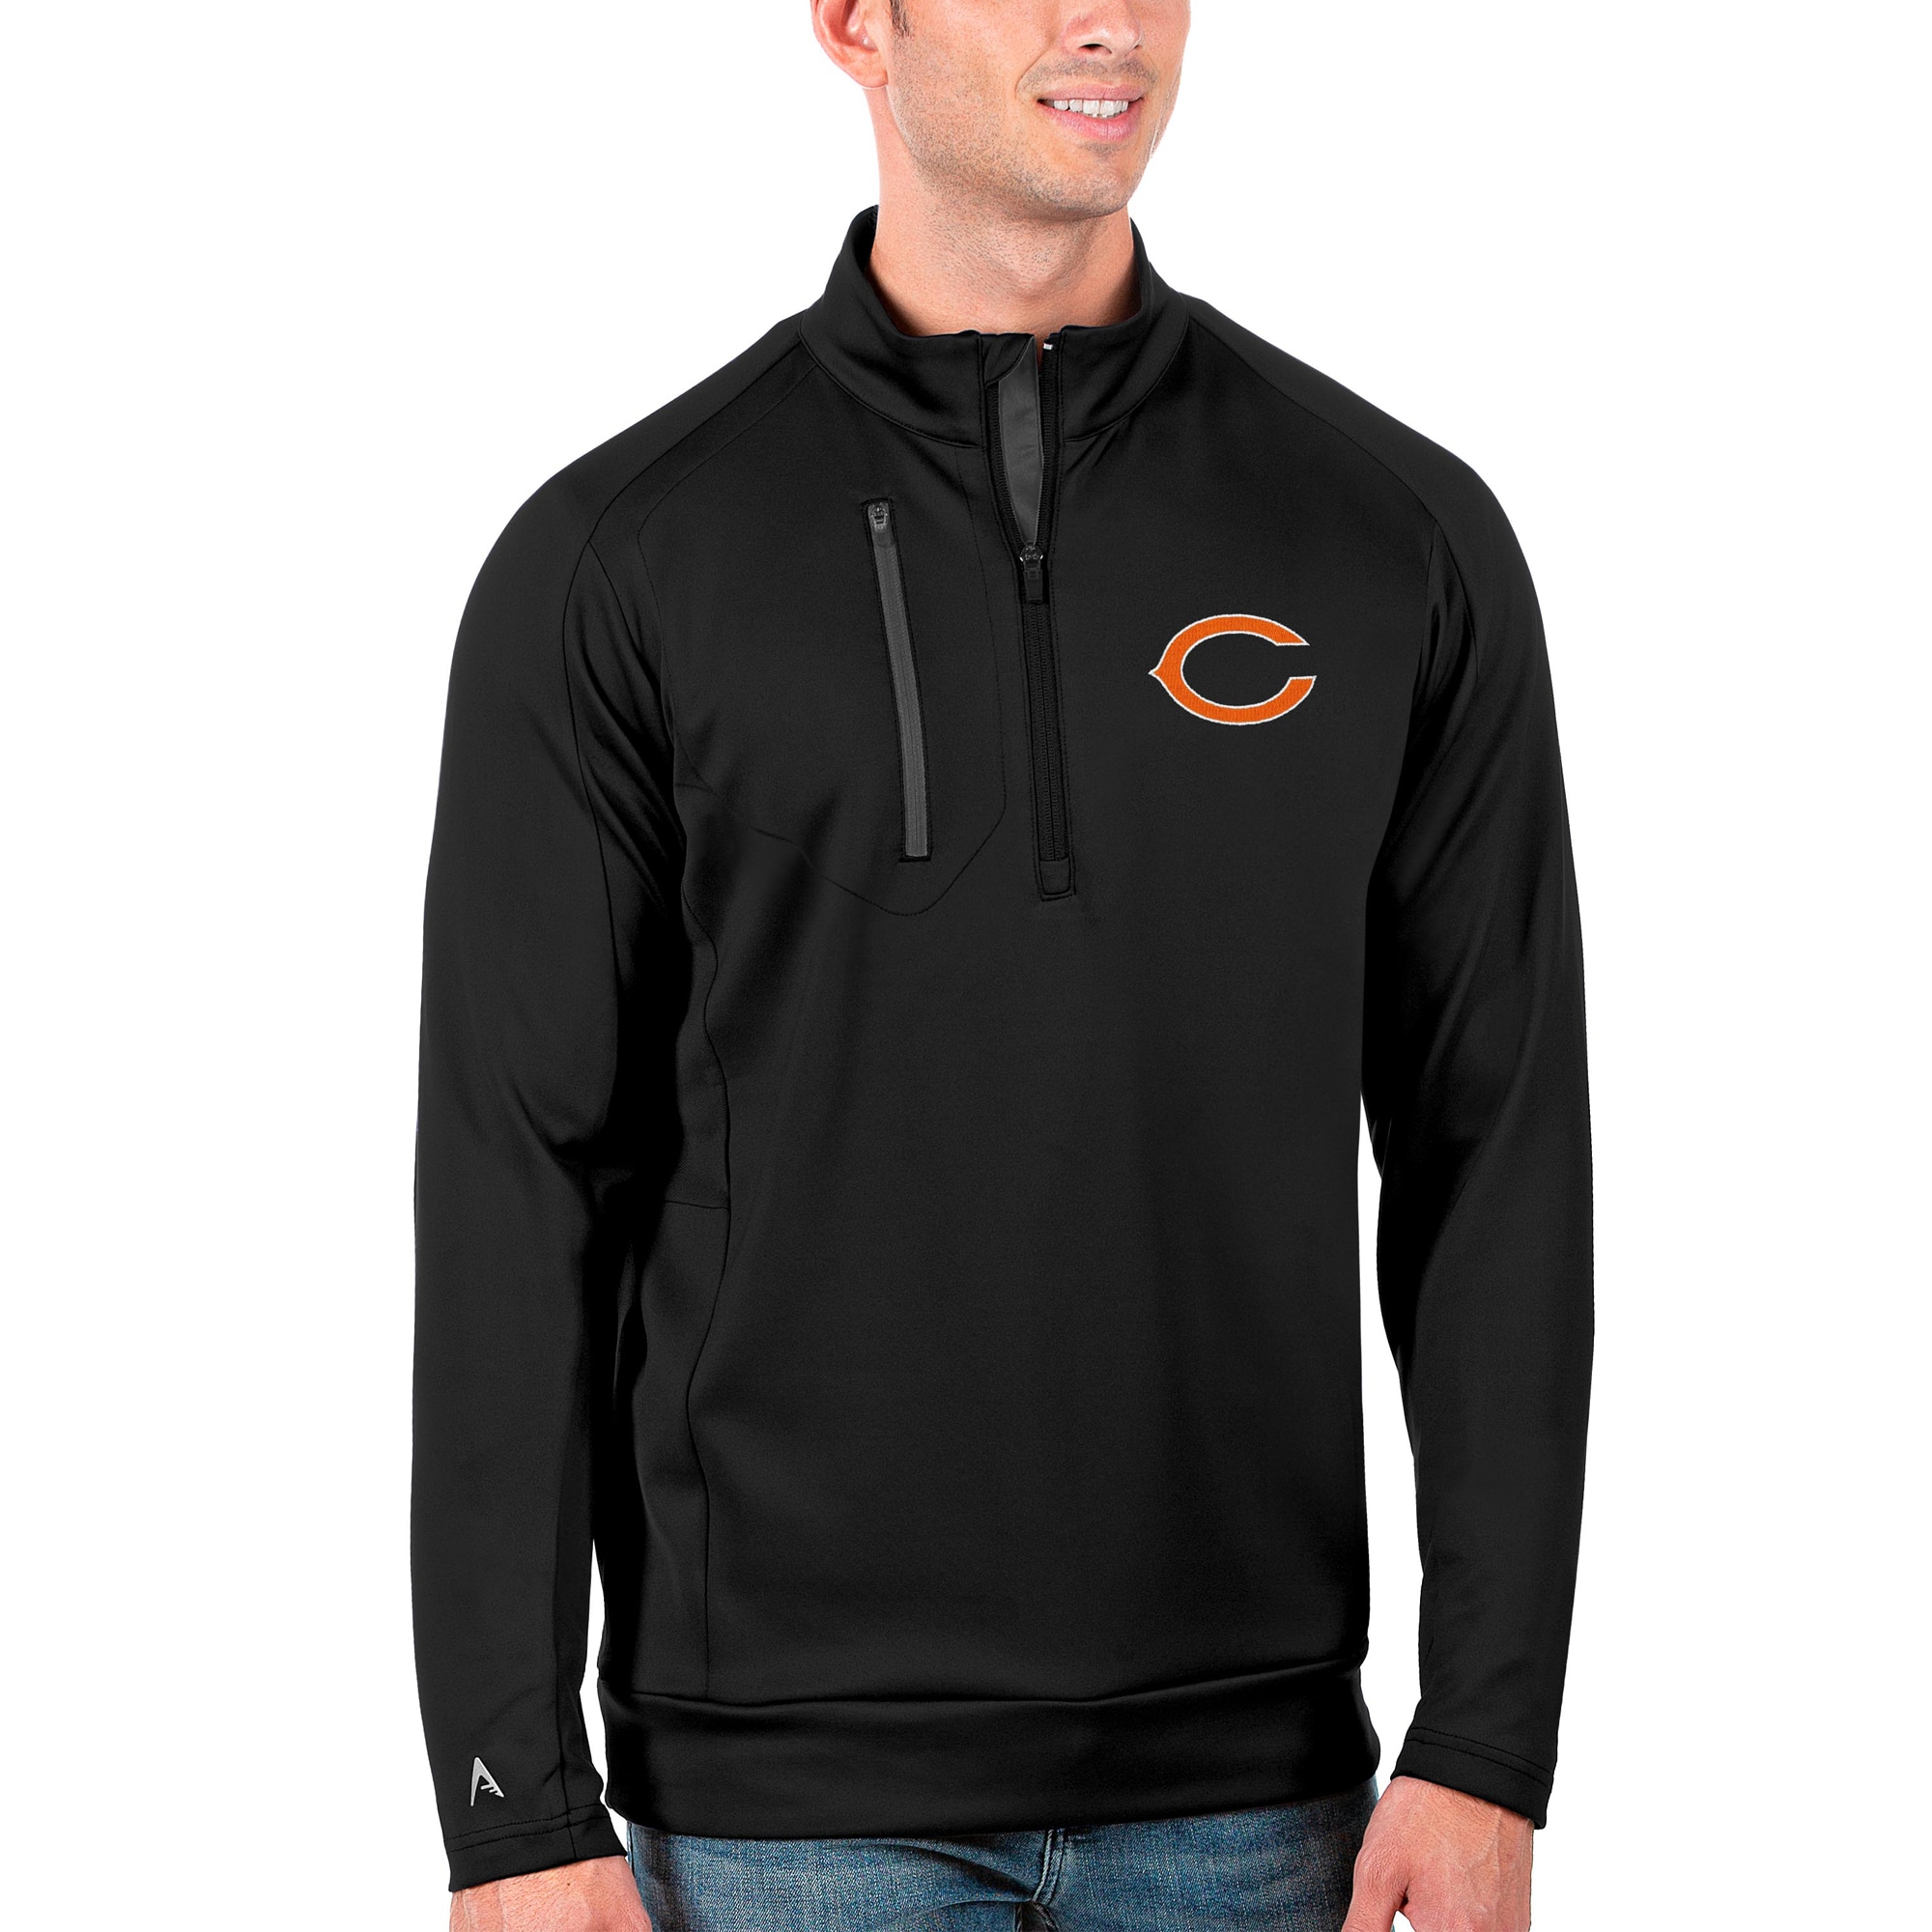 Men's Antigua Black/Charcoal Chicago Bears Primary Logo Generation Quarter-Zip Pullover Jacket - image 1 of 1